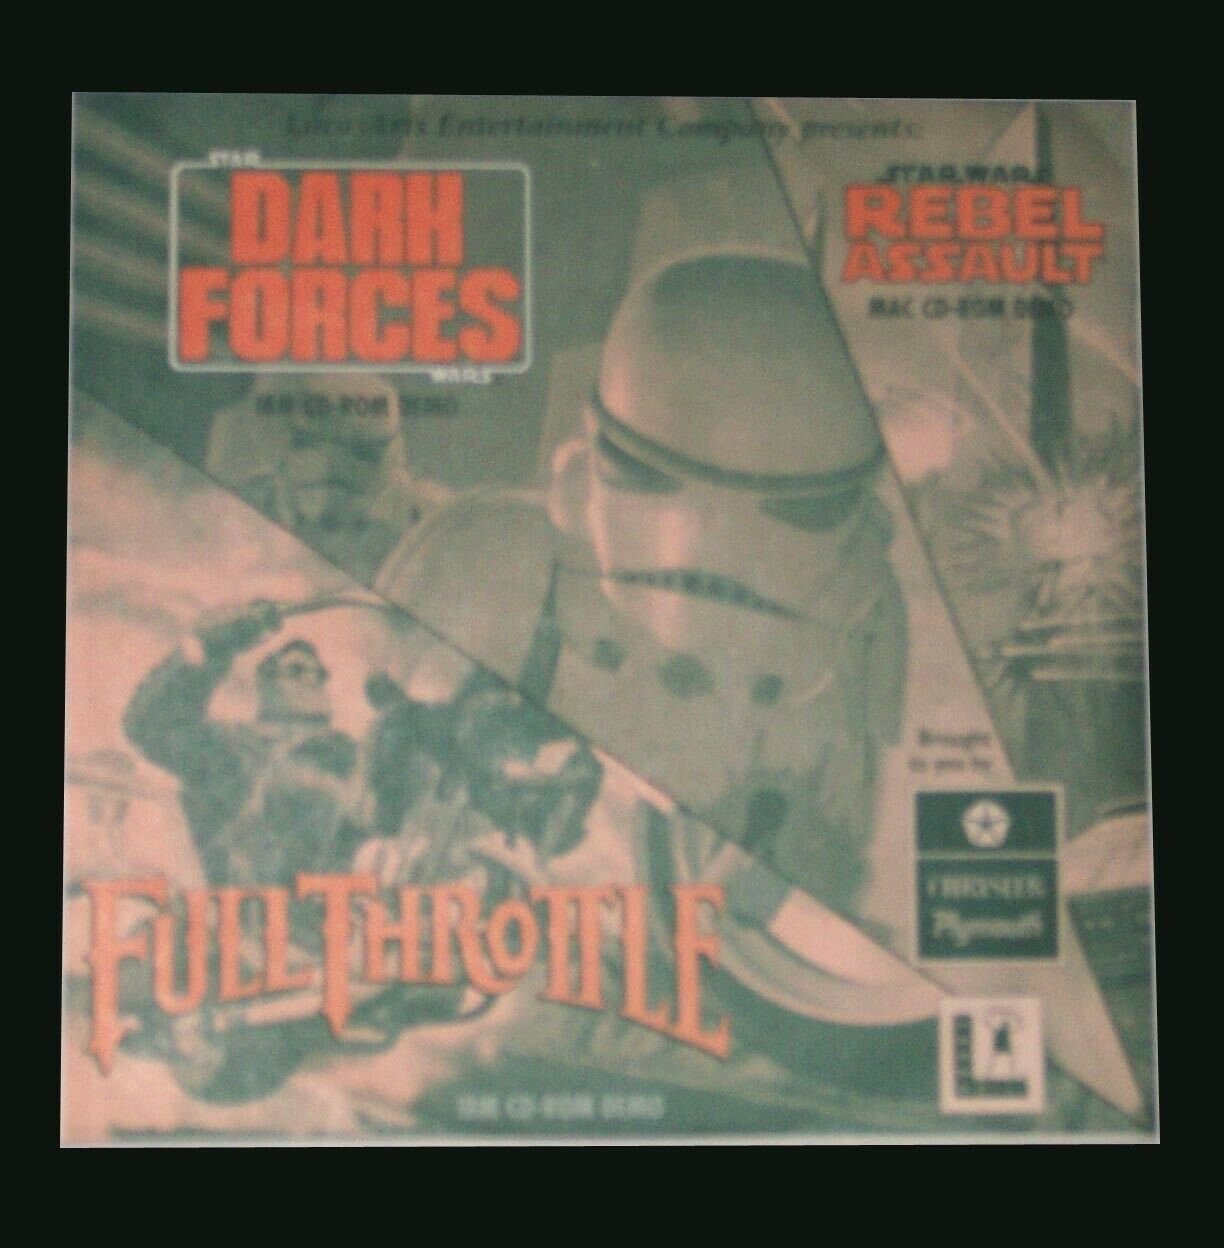 Star Wars DARK FORCES REBEL ASSAULT LucasArts promo CD FULL THROTTLE